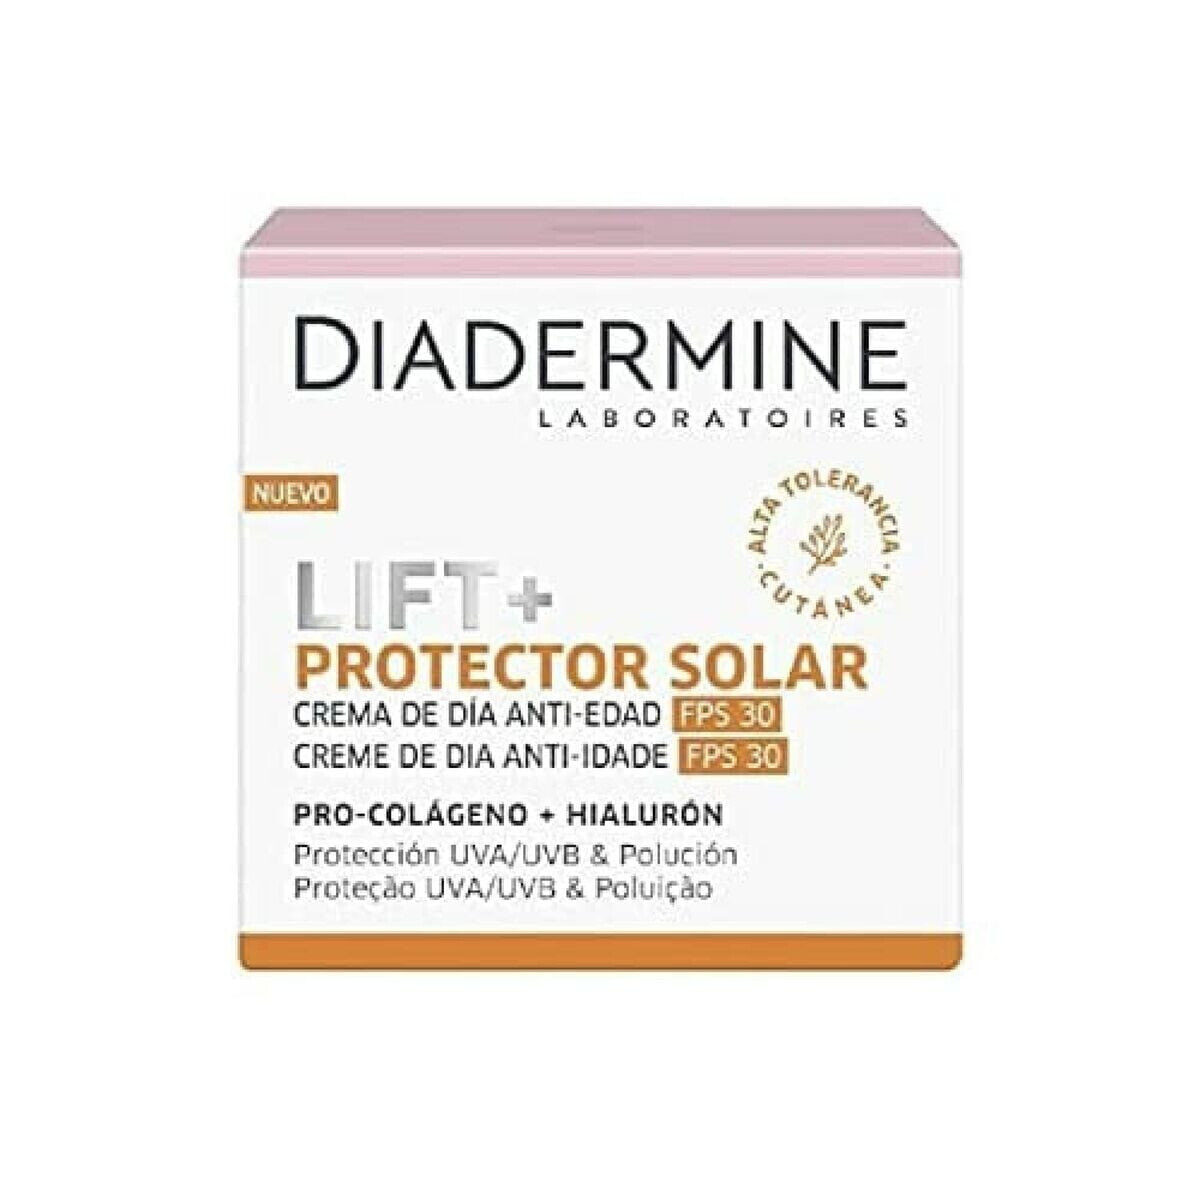 Дневной крем Diadermine Lift Protector Solar Oт морщин Spf 30 50 ml